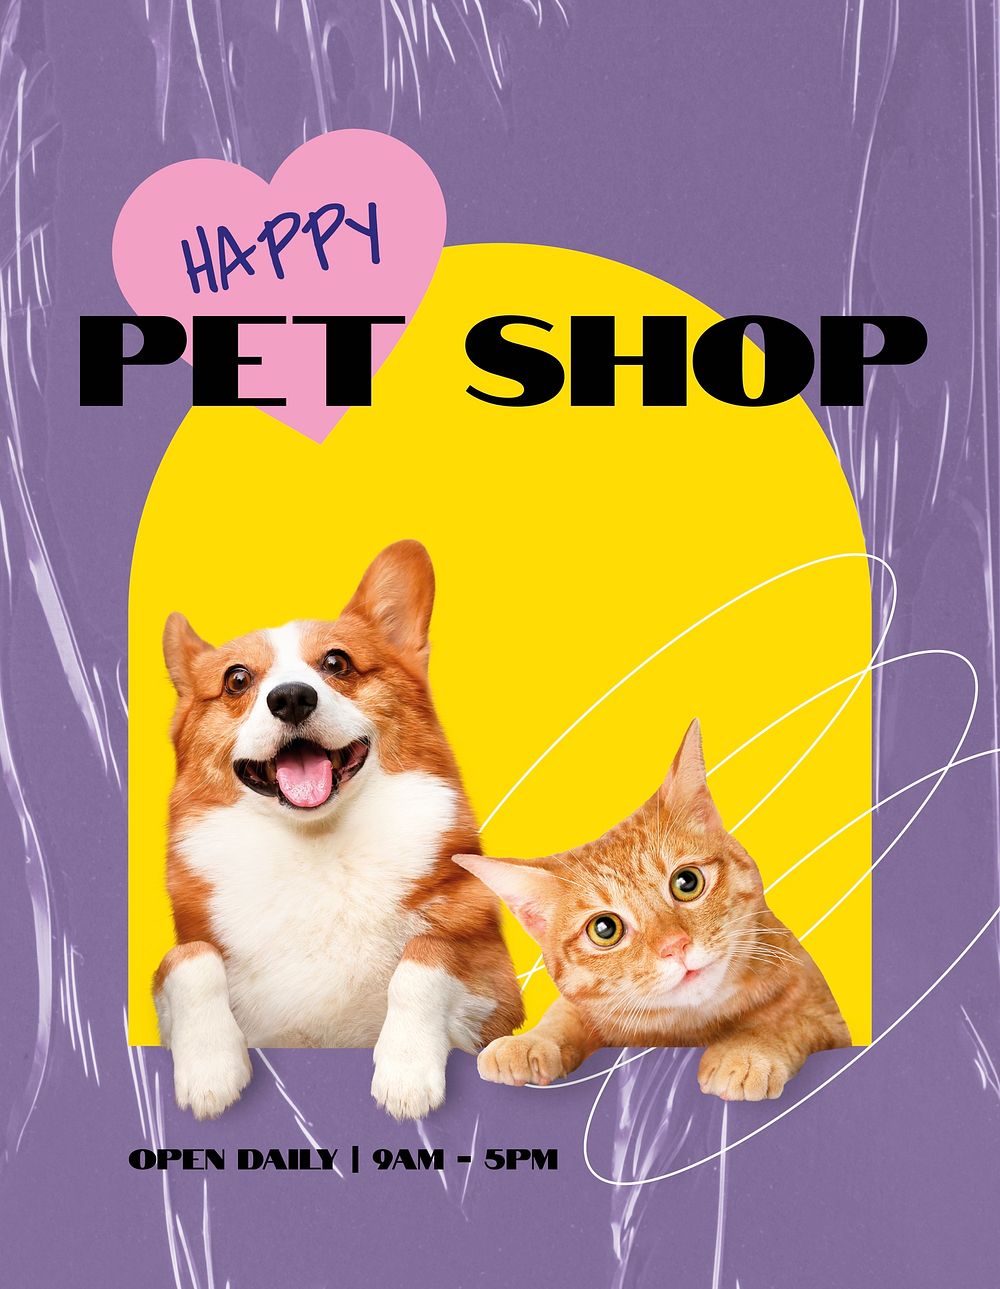 Pet shop flyer template, dog & cat photo psd